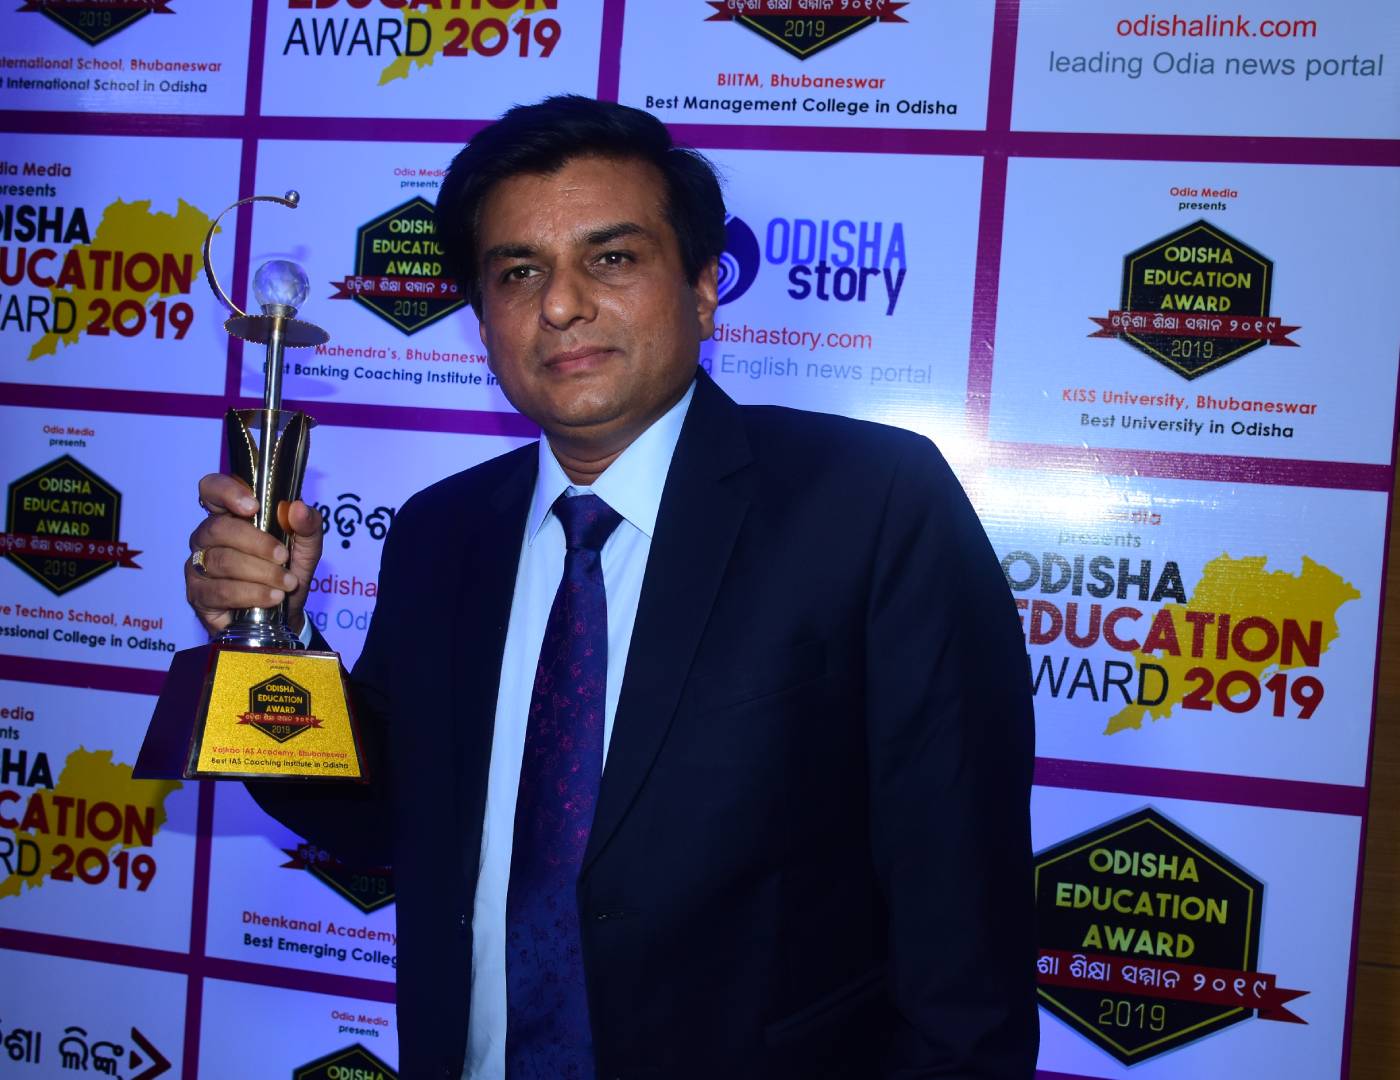 Odisha Education Award 2019